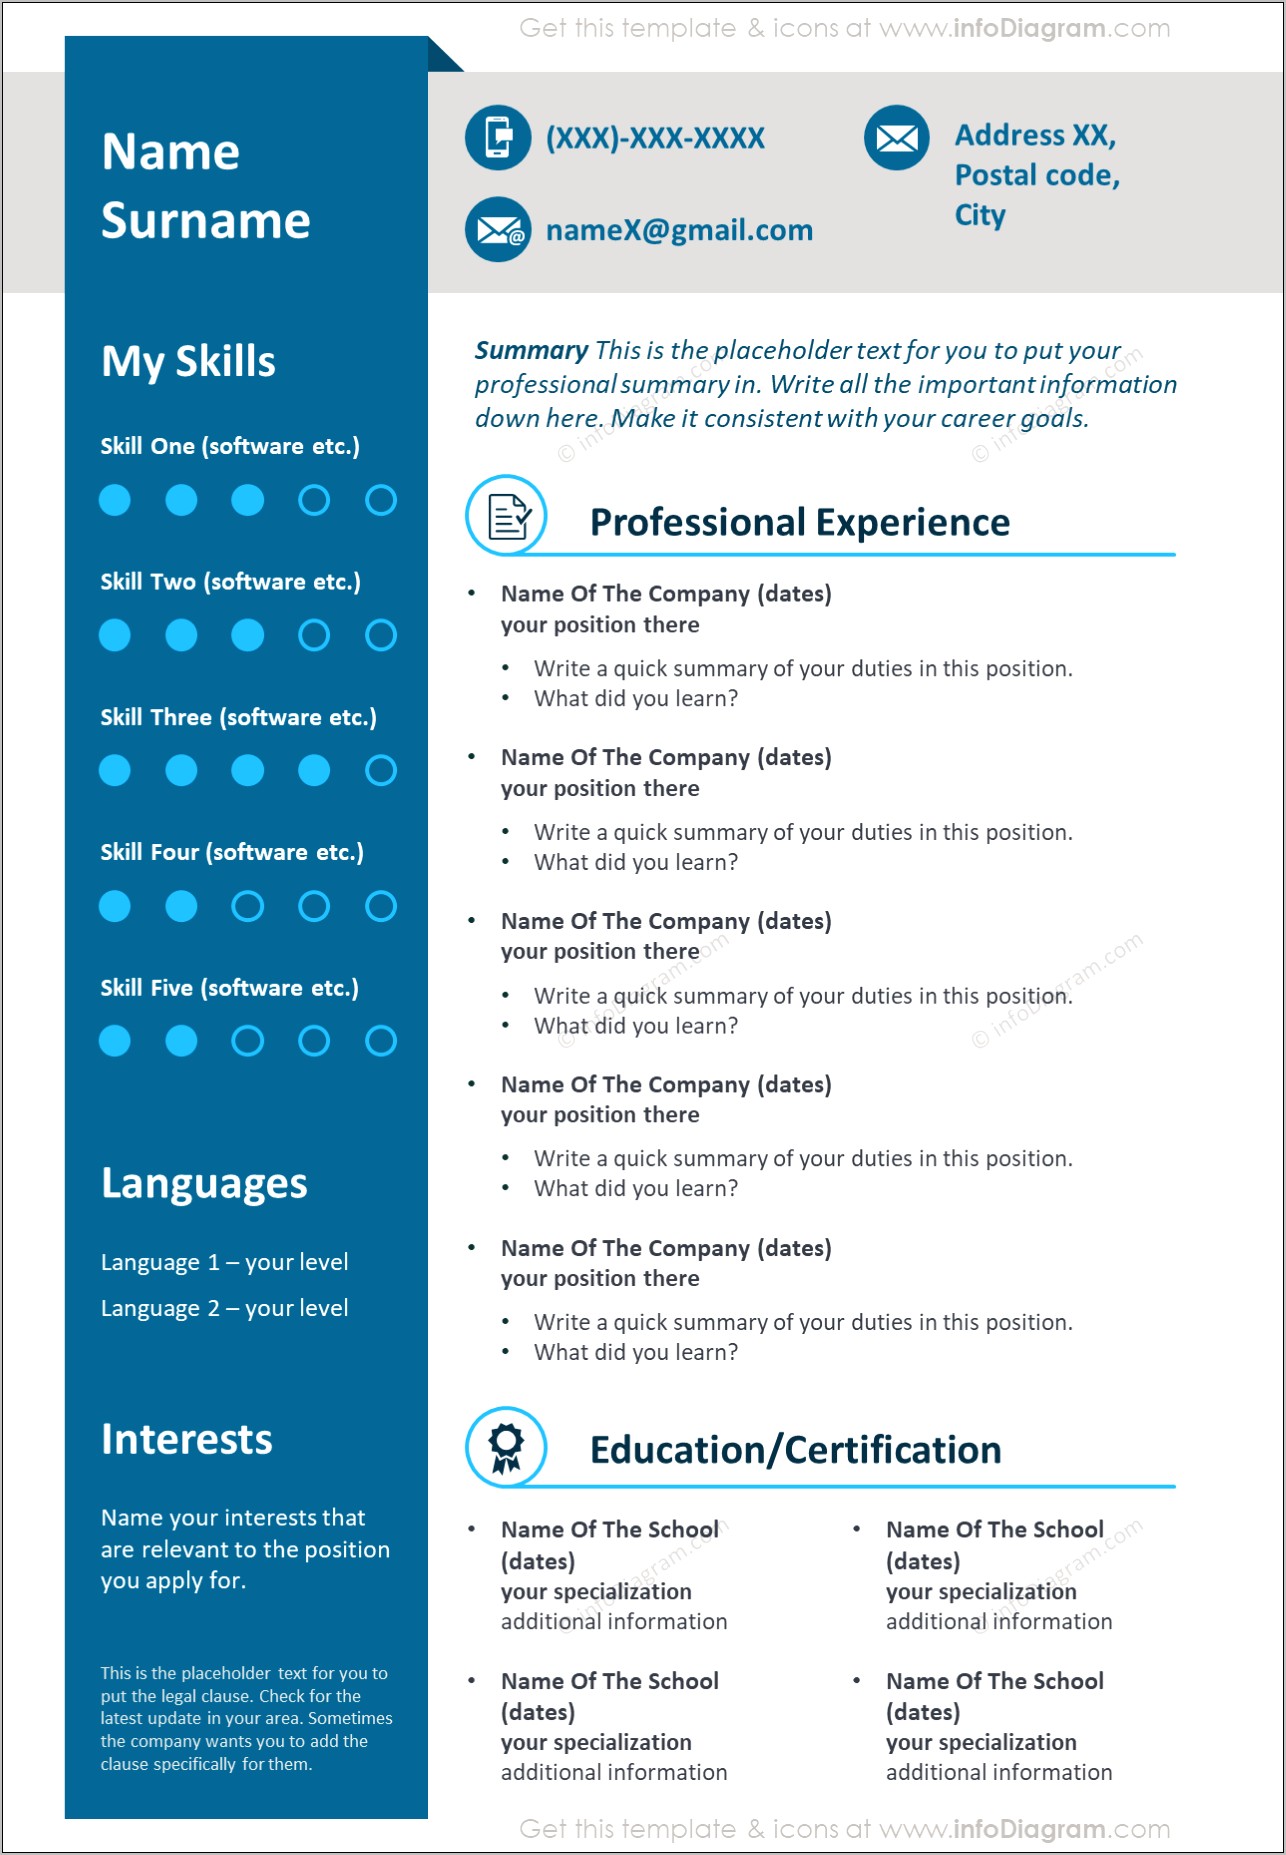 Levels Of Language Skills For Resume